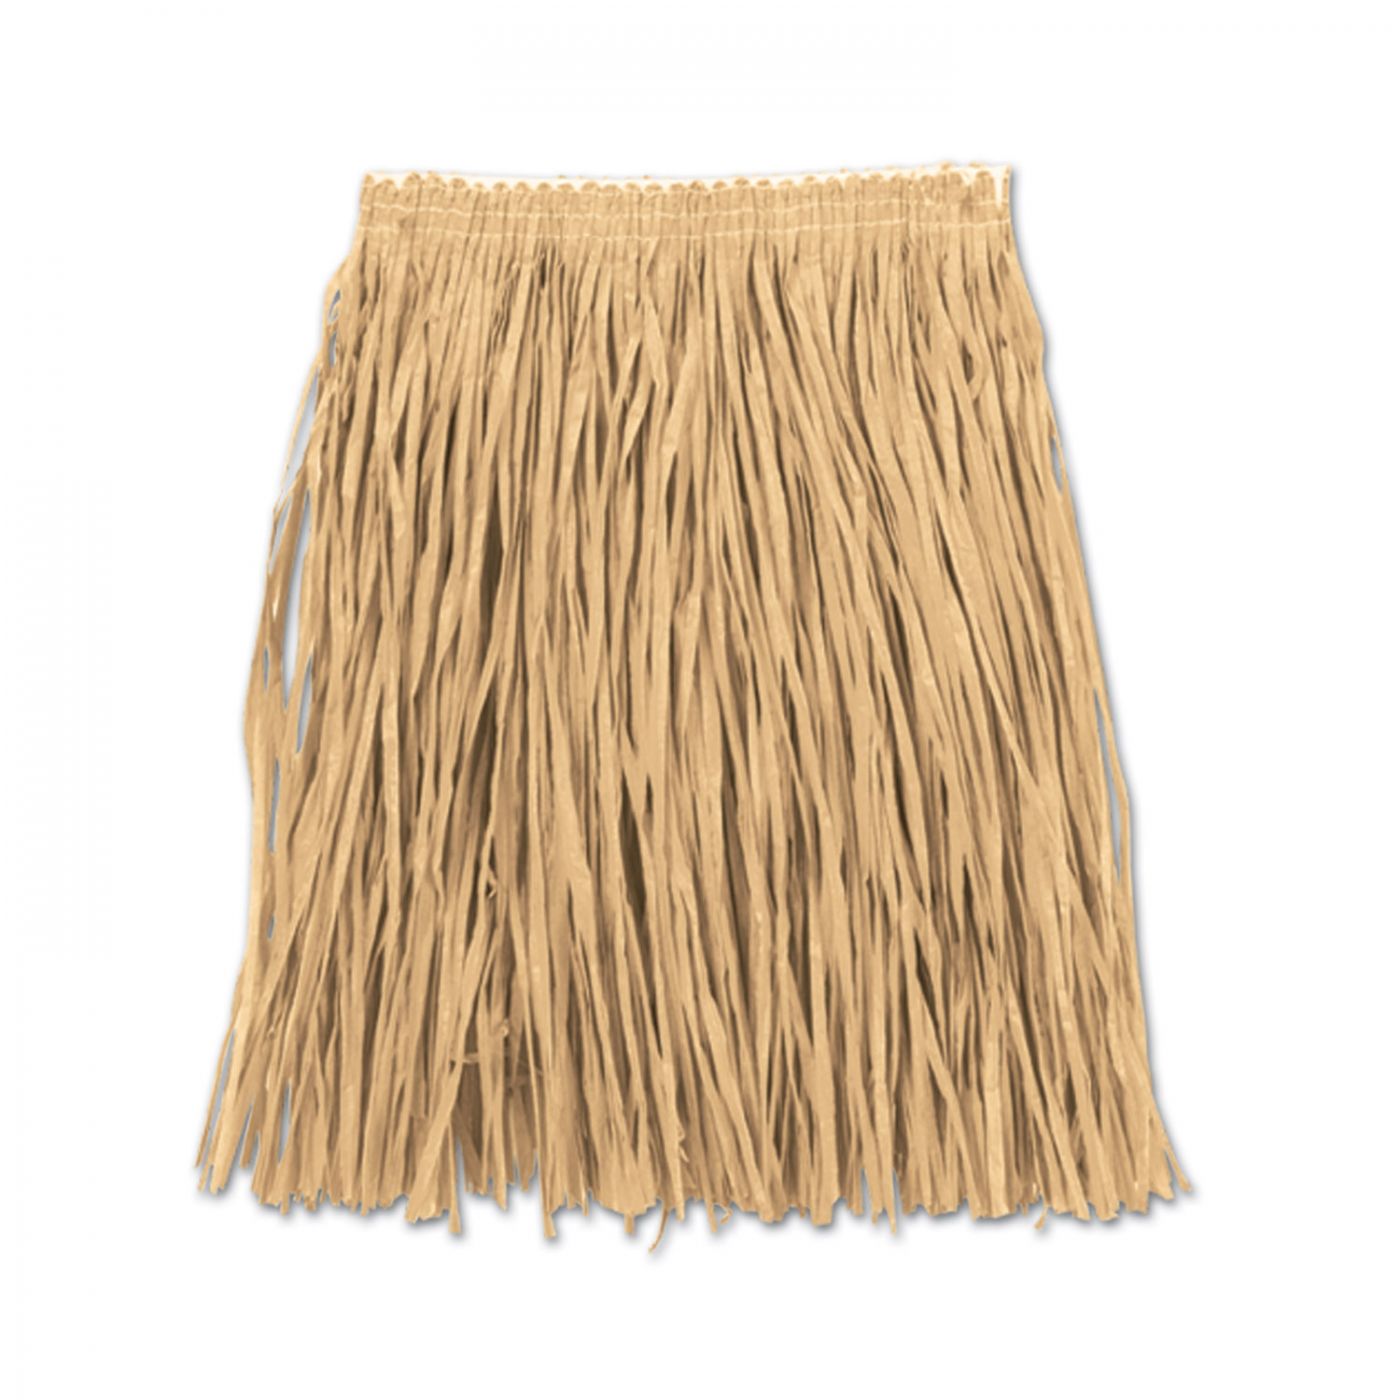 Image of Adult Mini Hula Skirt (12)